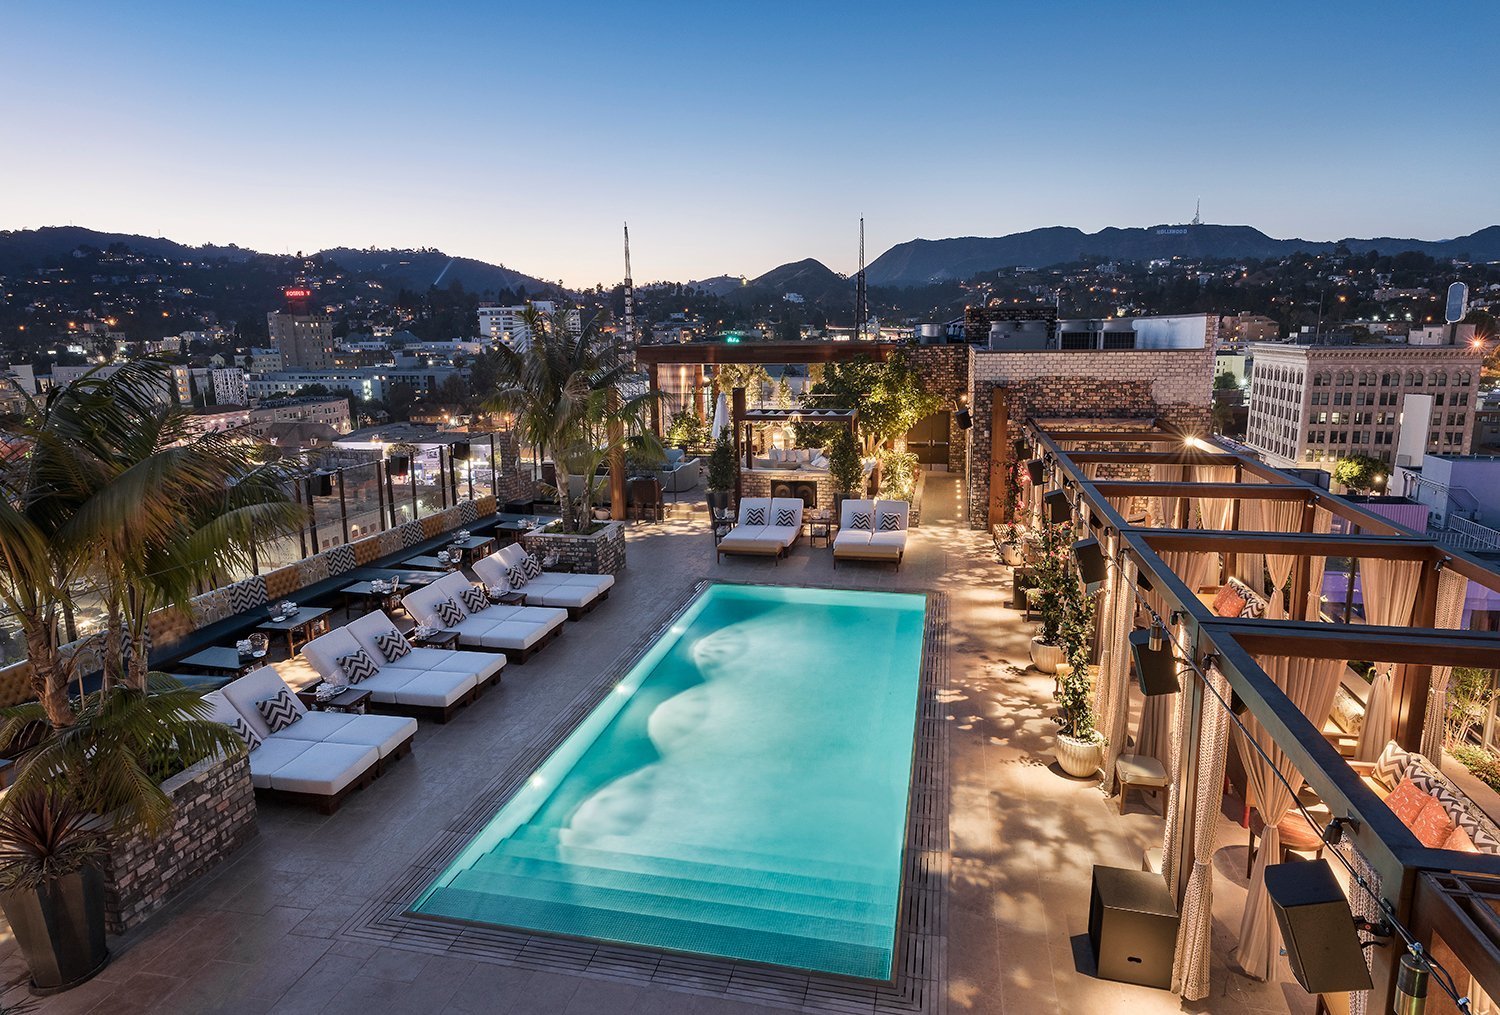 Dream Hollywood Hotel, Hollywood, CA Jobs | Hospitality Online